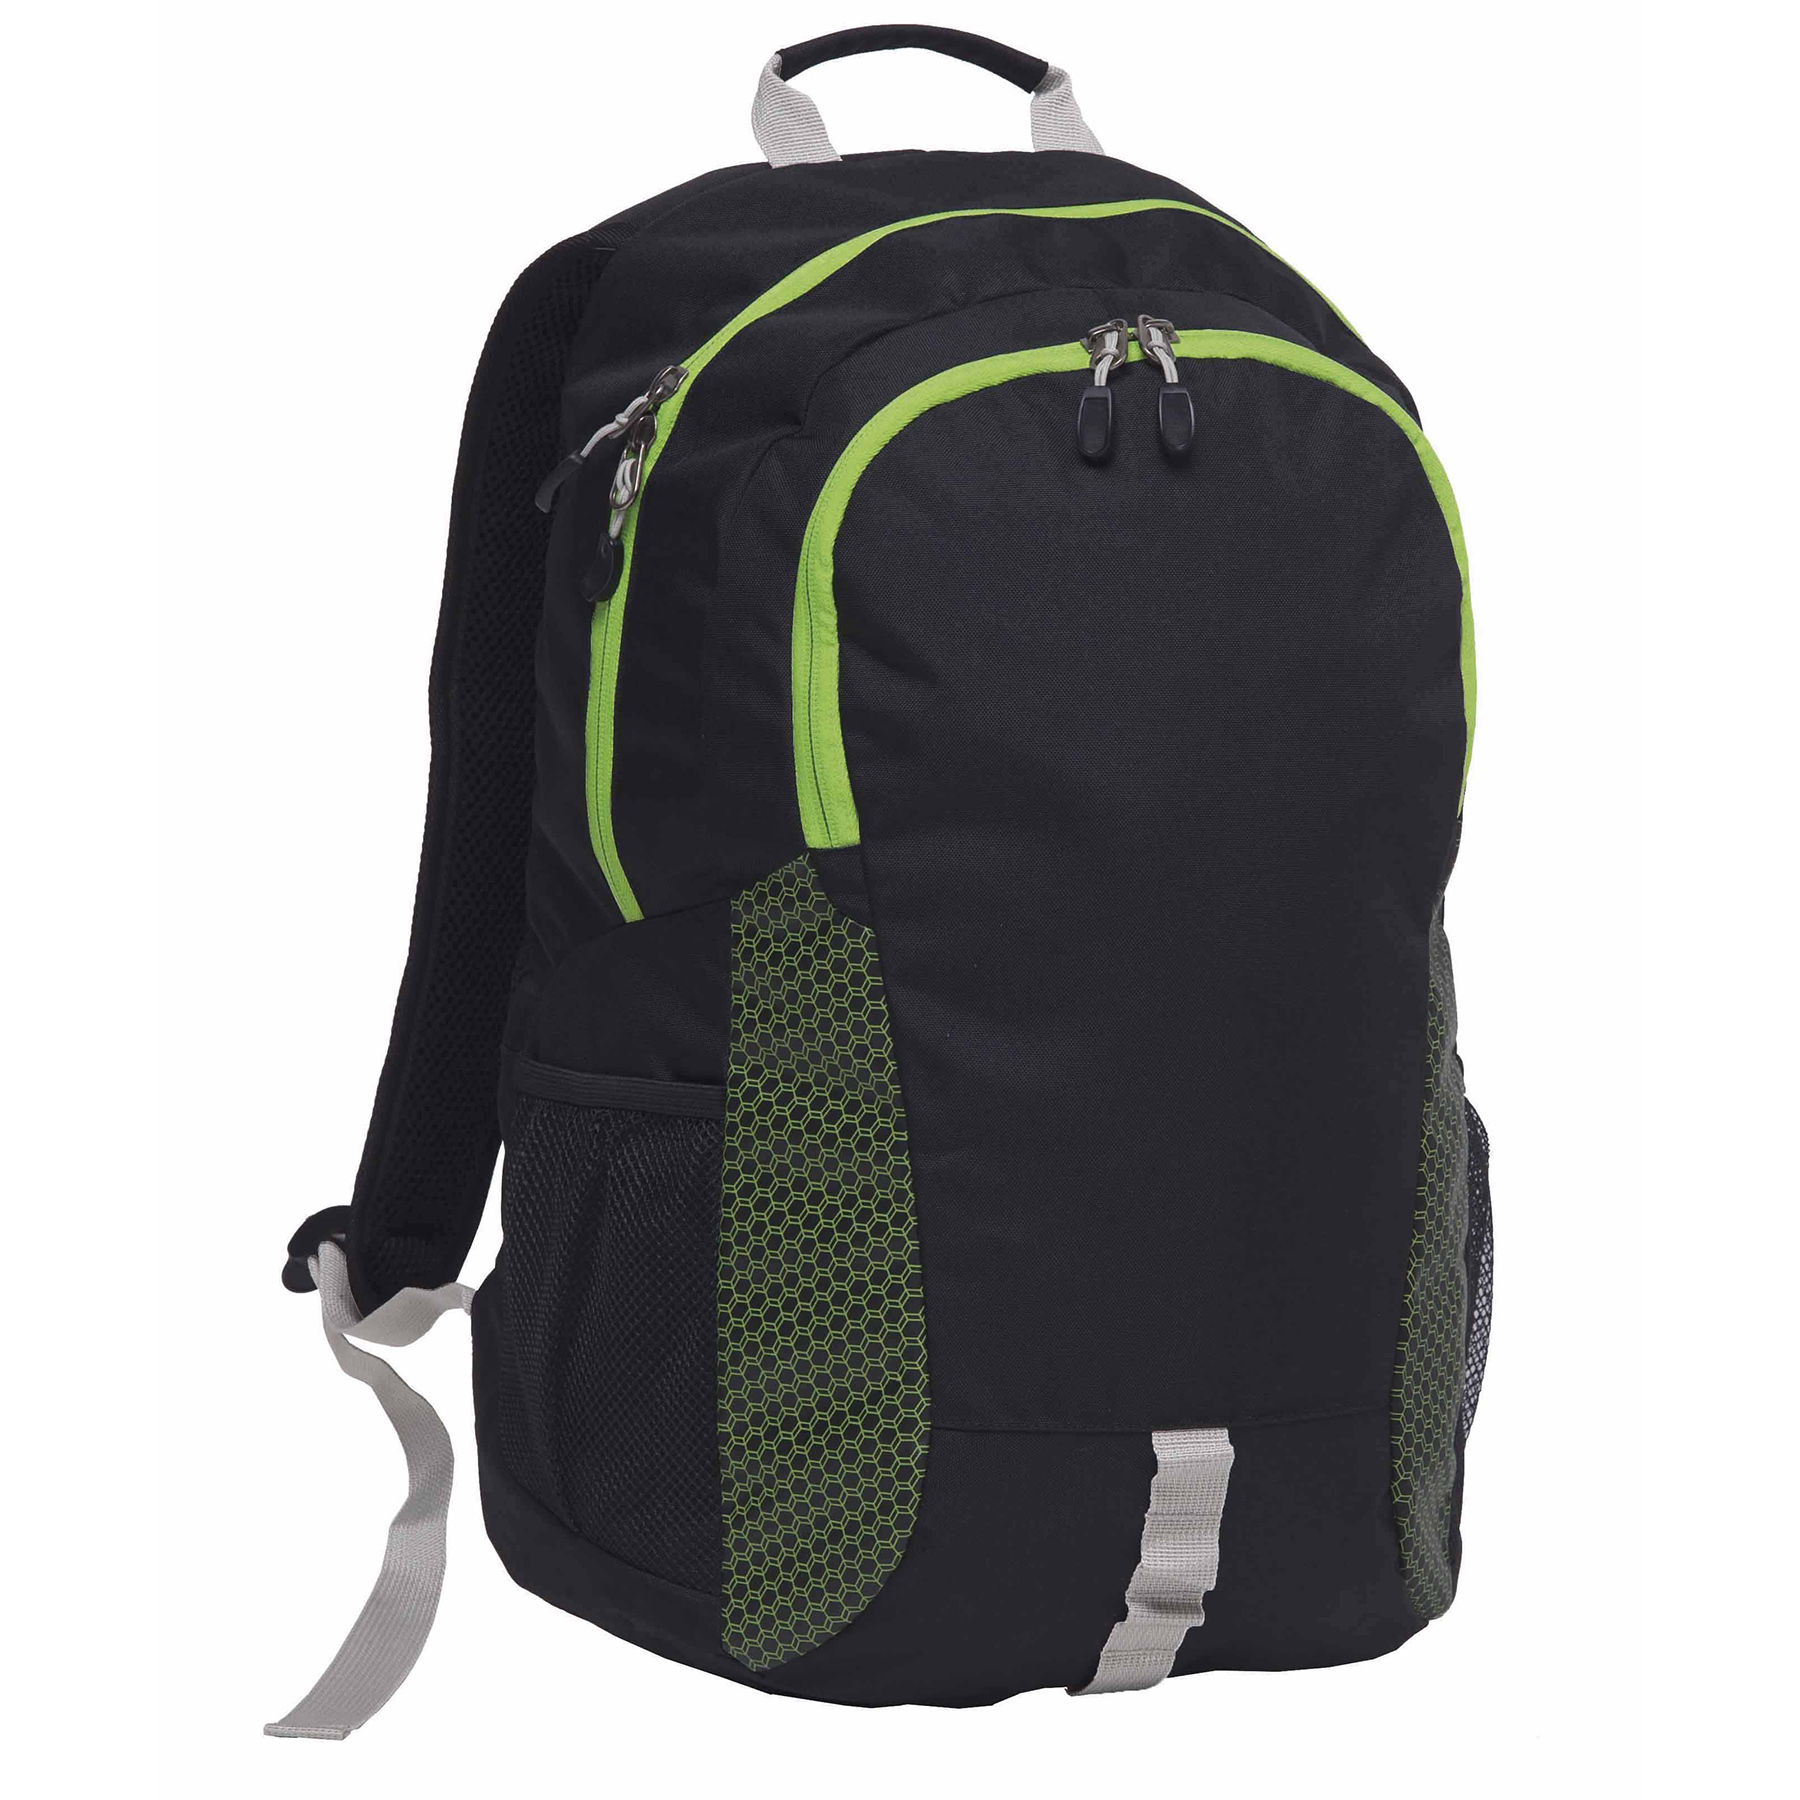 Grommet Backpack | Gear For Life